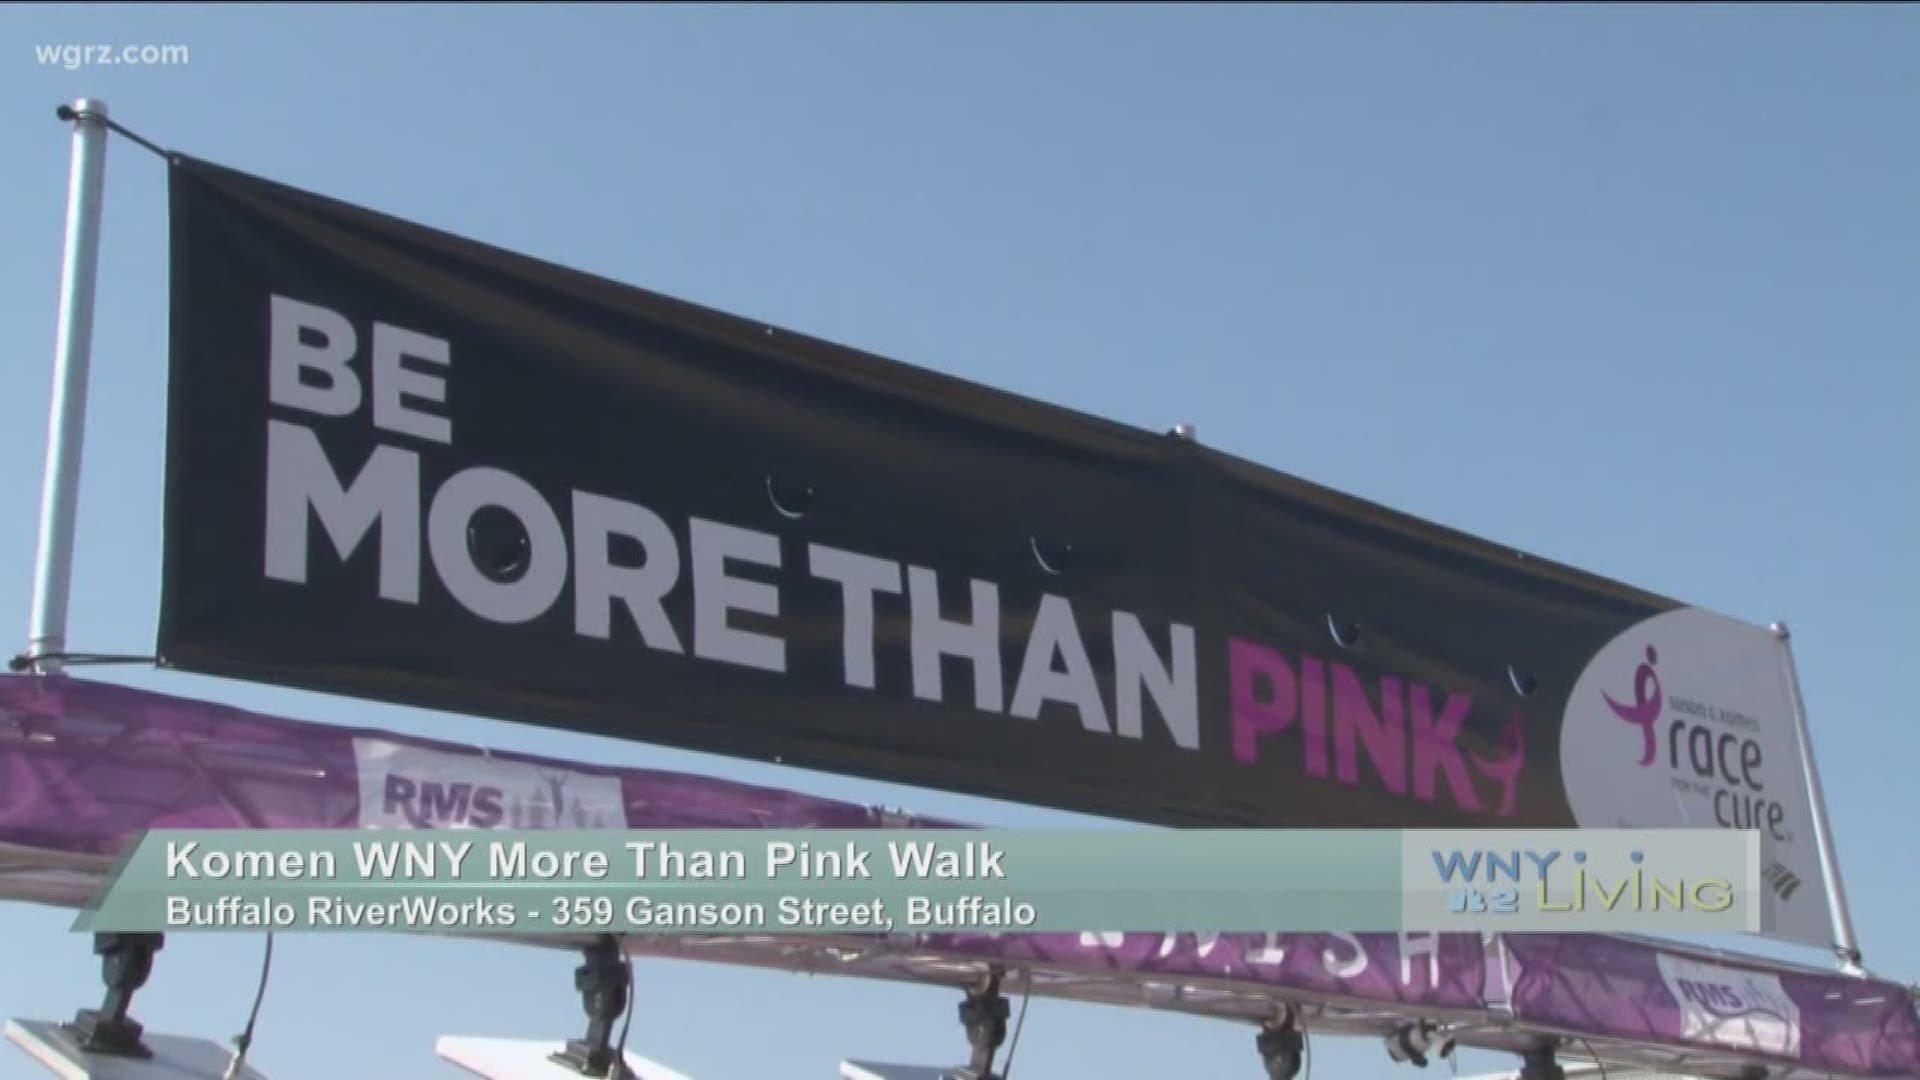 WNY Living - May 18 - Susan G. Komen WNY More Than Pink Walk (SPONSORED CONTENT)